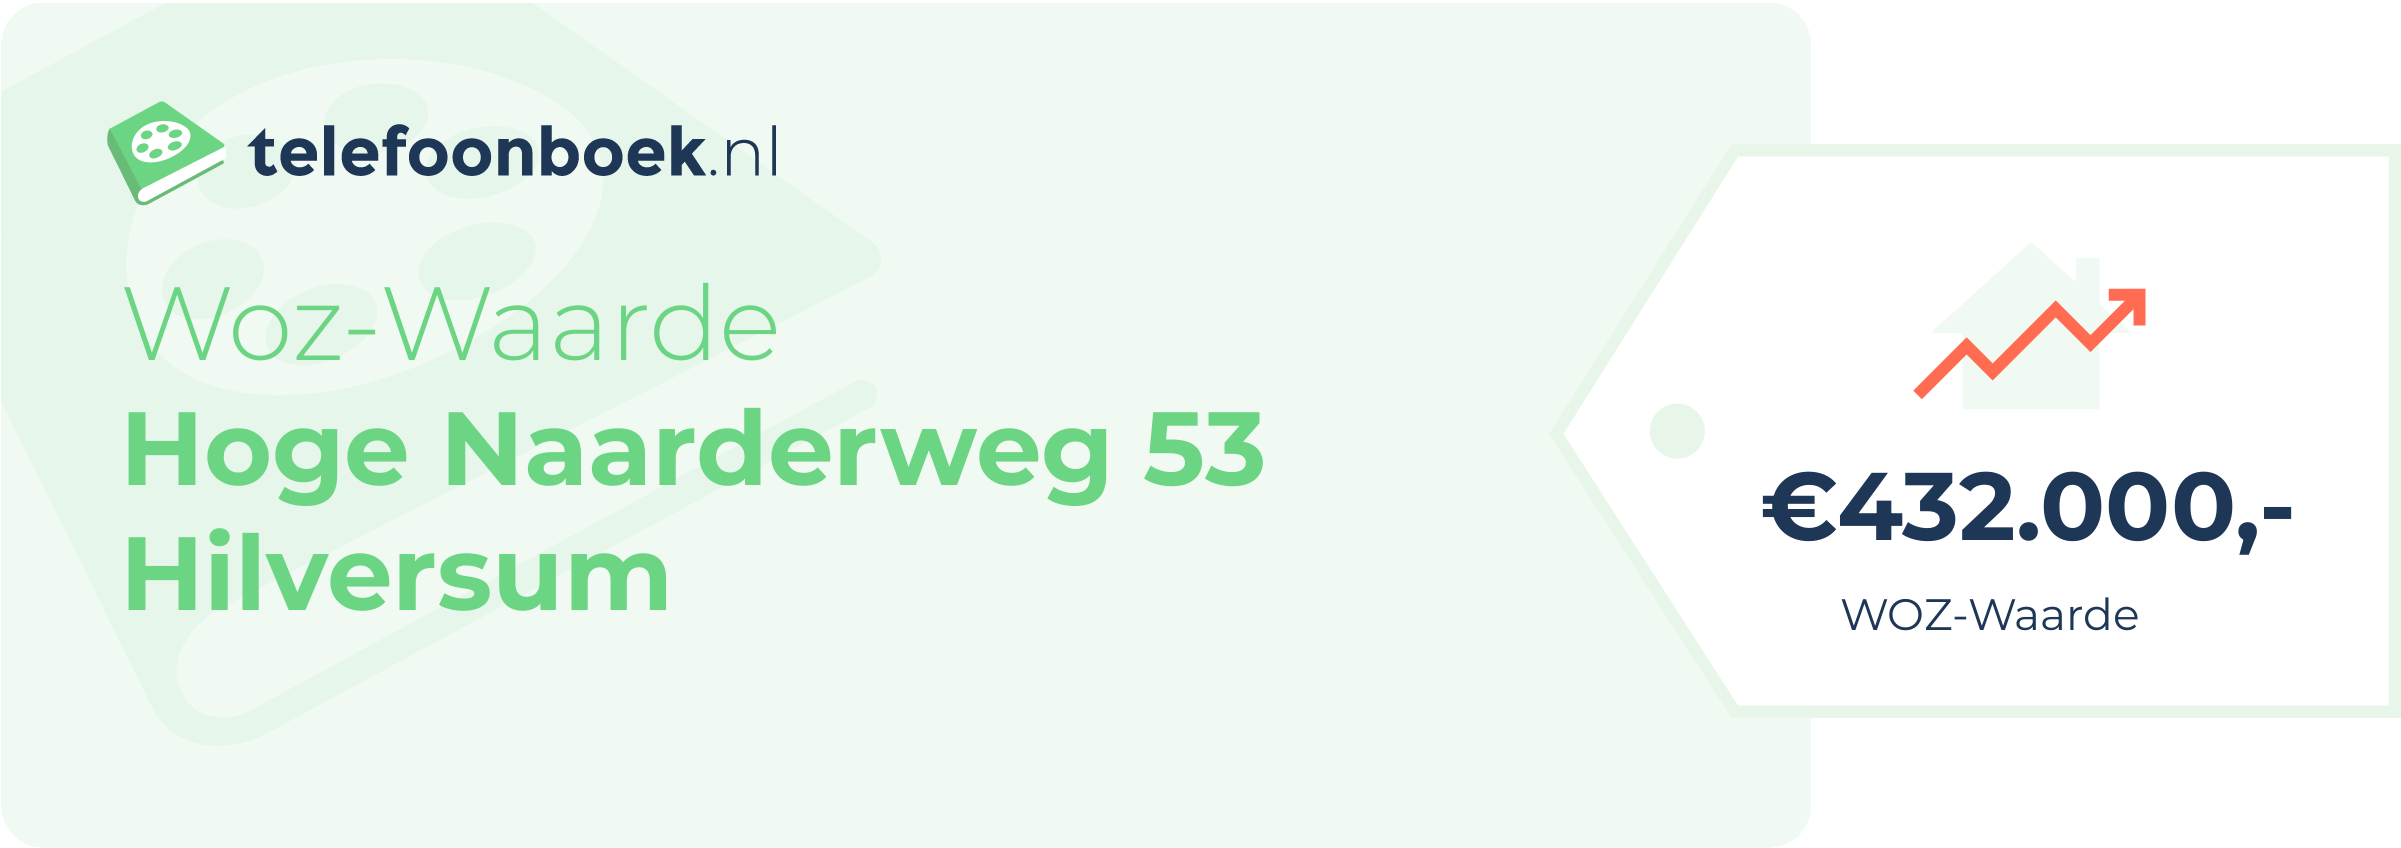 WOZ-waarde Hoge Naarderweg 53 Hilversum